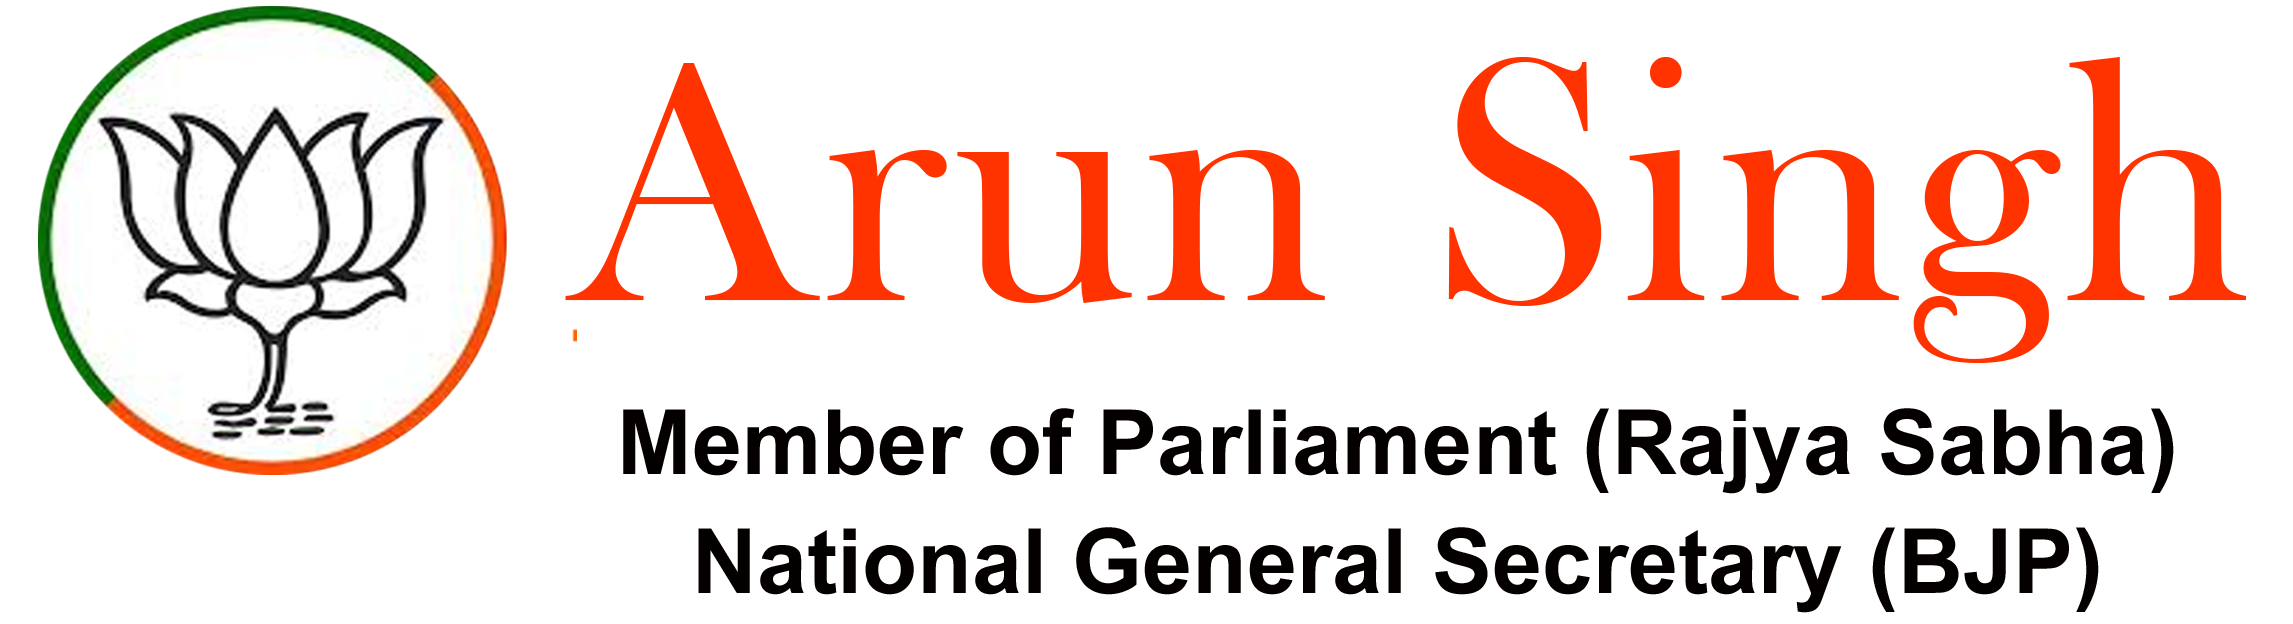 arun singh logo